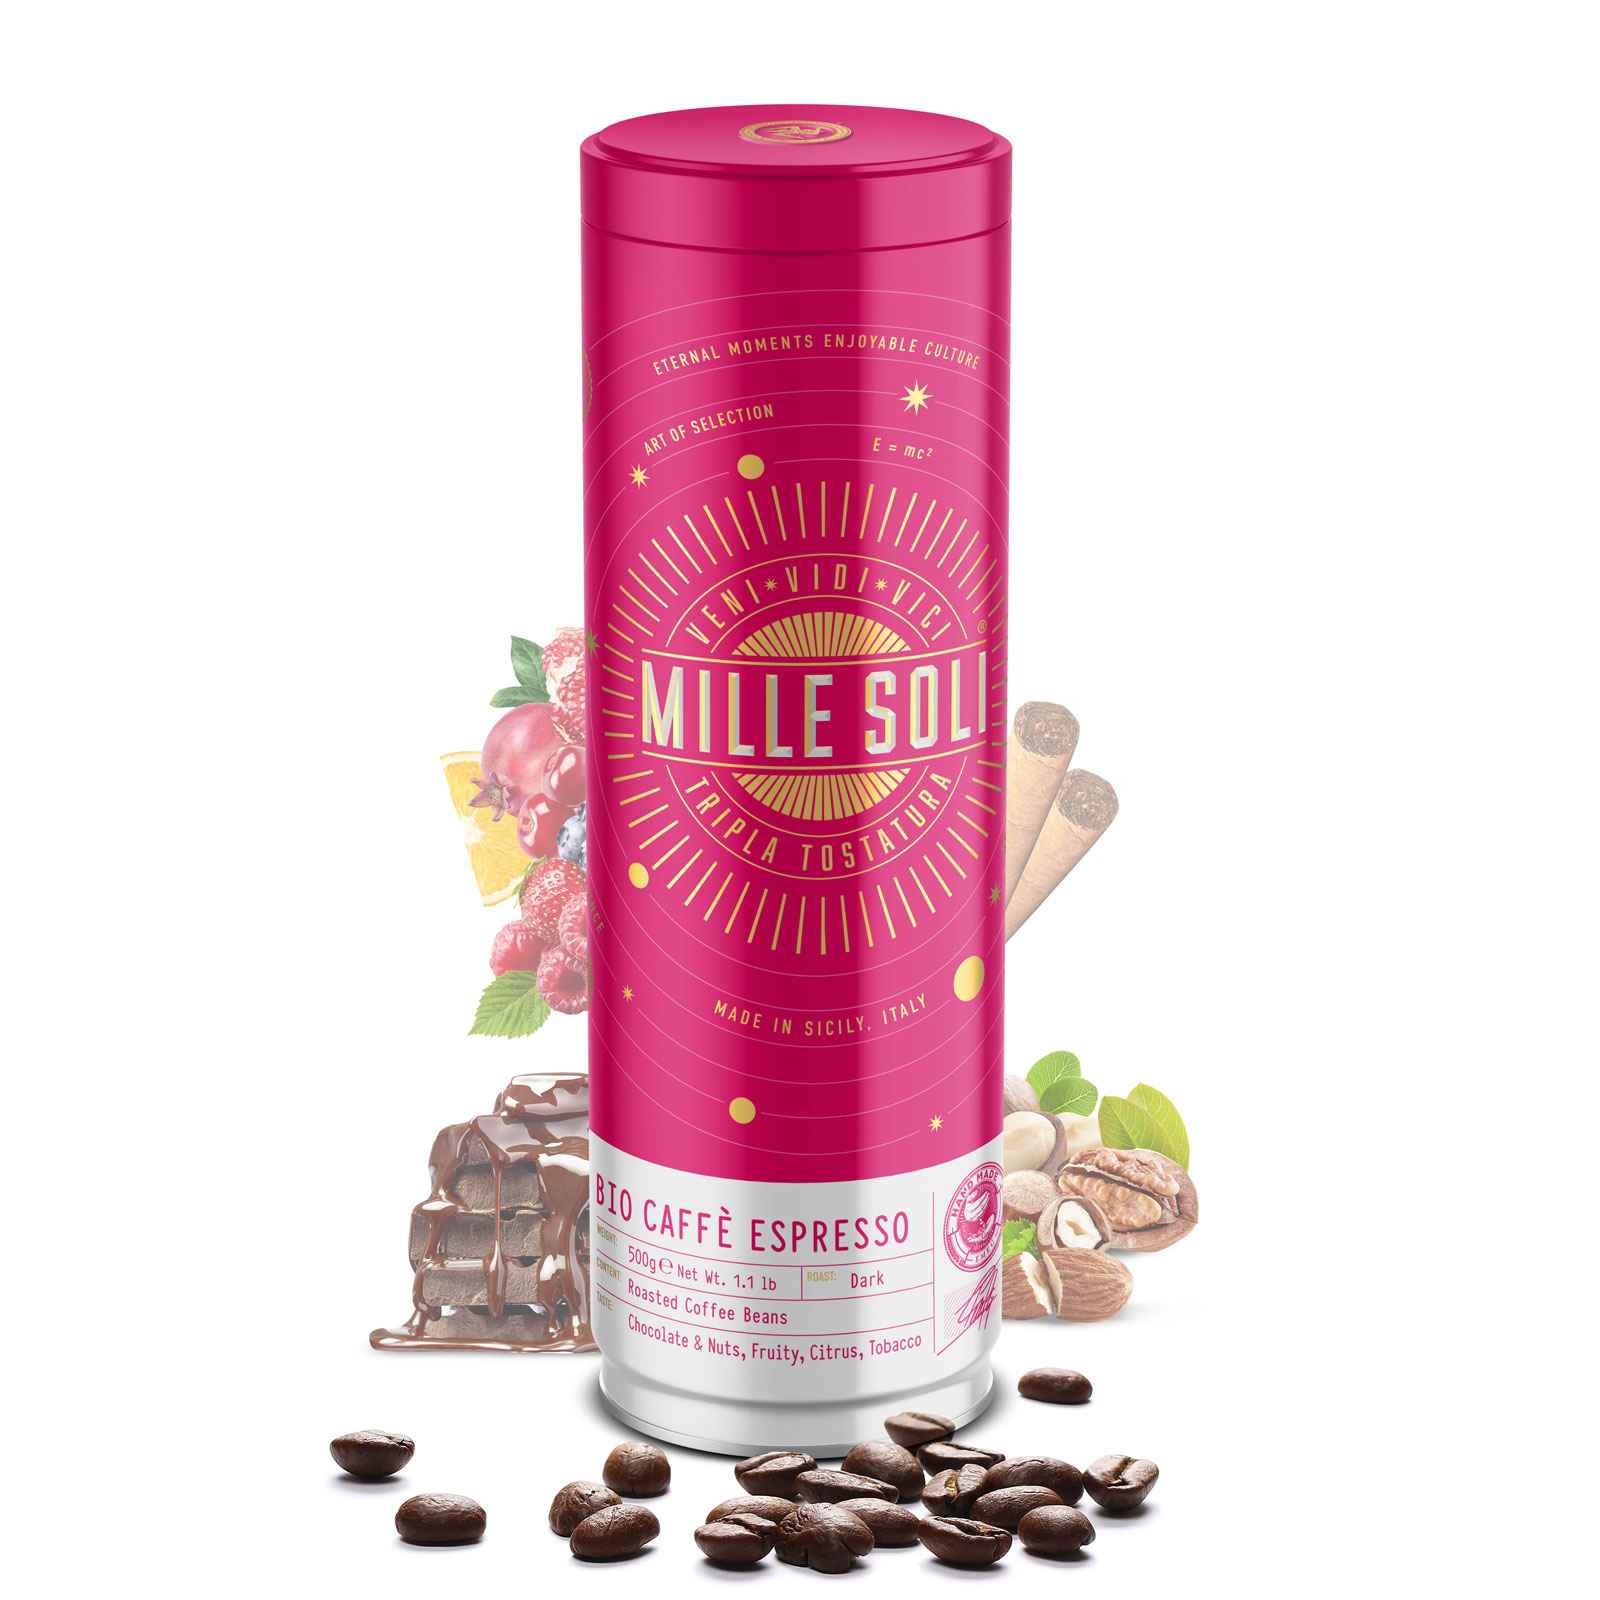 MILLE SOLI - ORGANIC Caffè Espresso - 500g - Beans